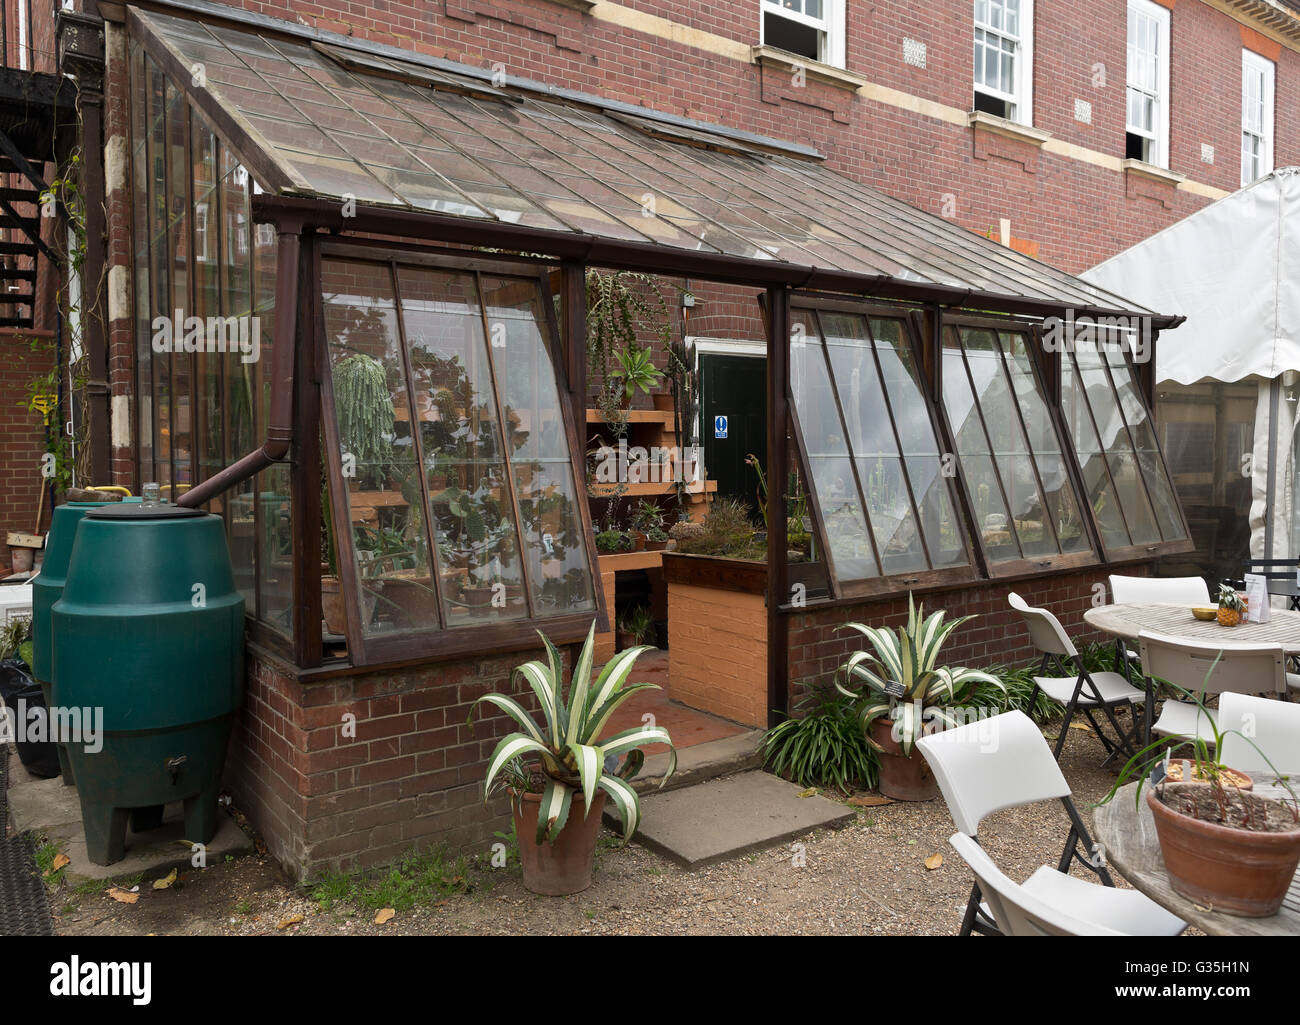 Chelsea Physic Garden Café Greenhouse - Chelsea, London, UK, Europe Stock Photo